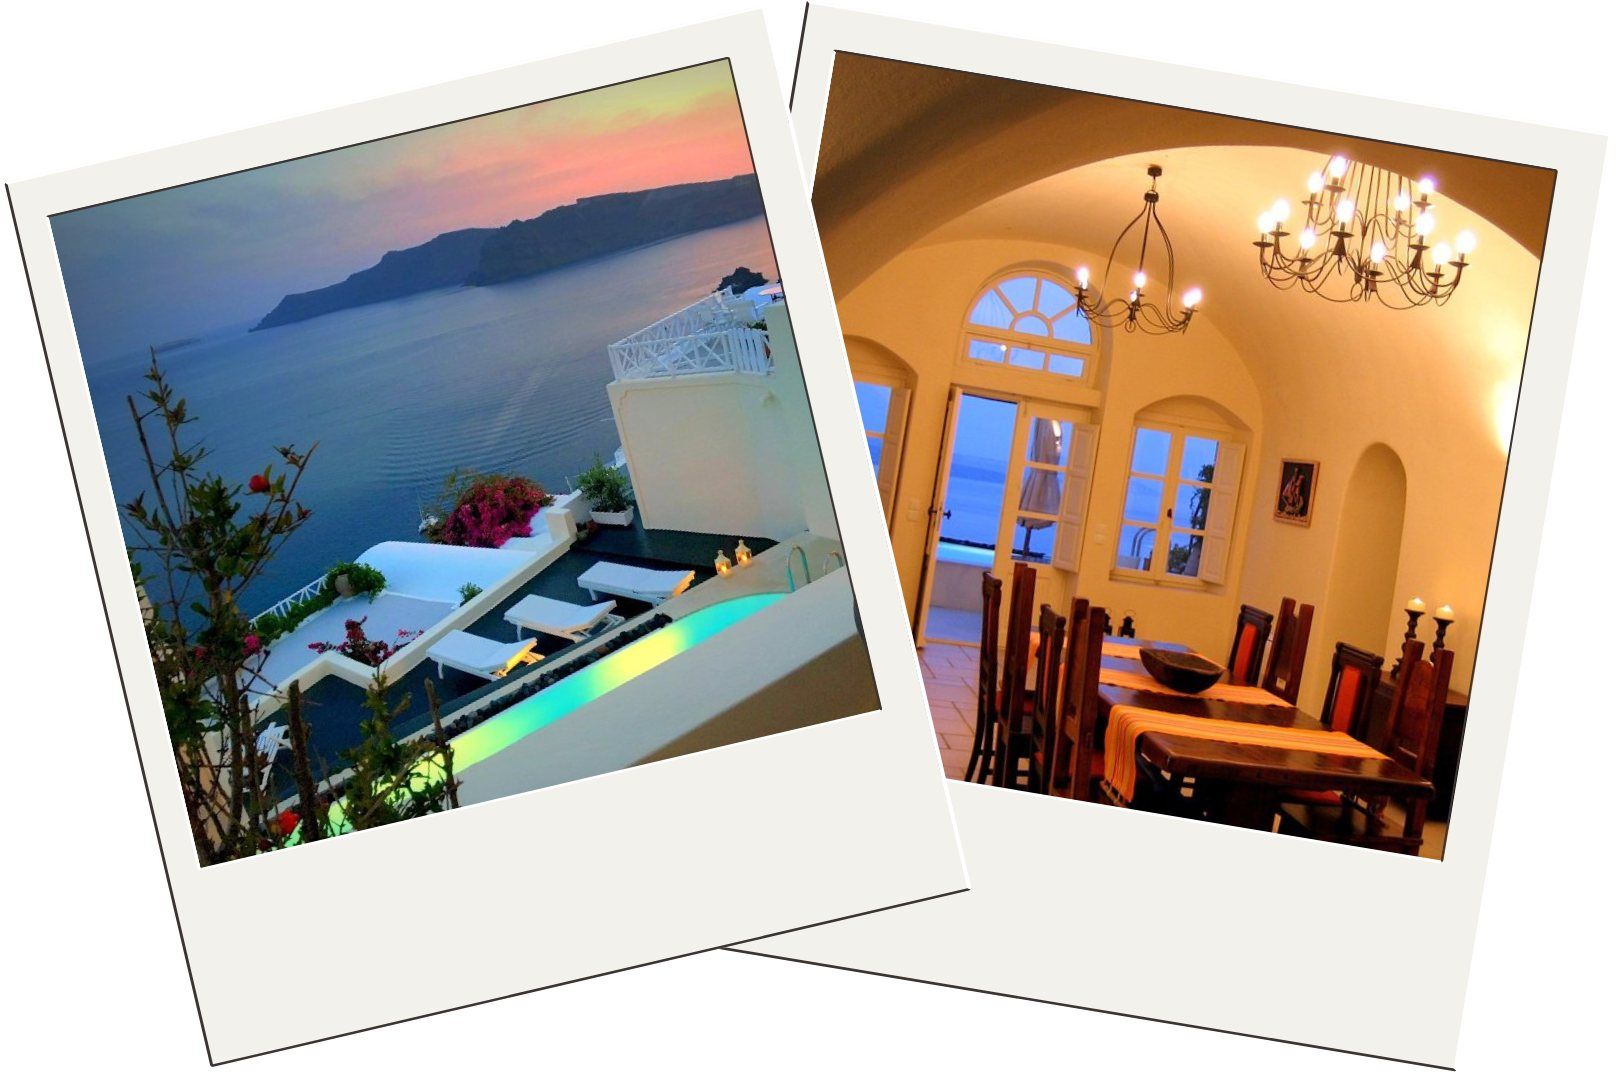 The Best Airbnbs in Santorini, Greece